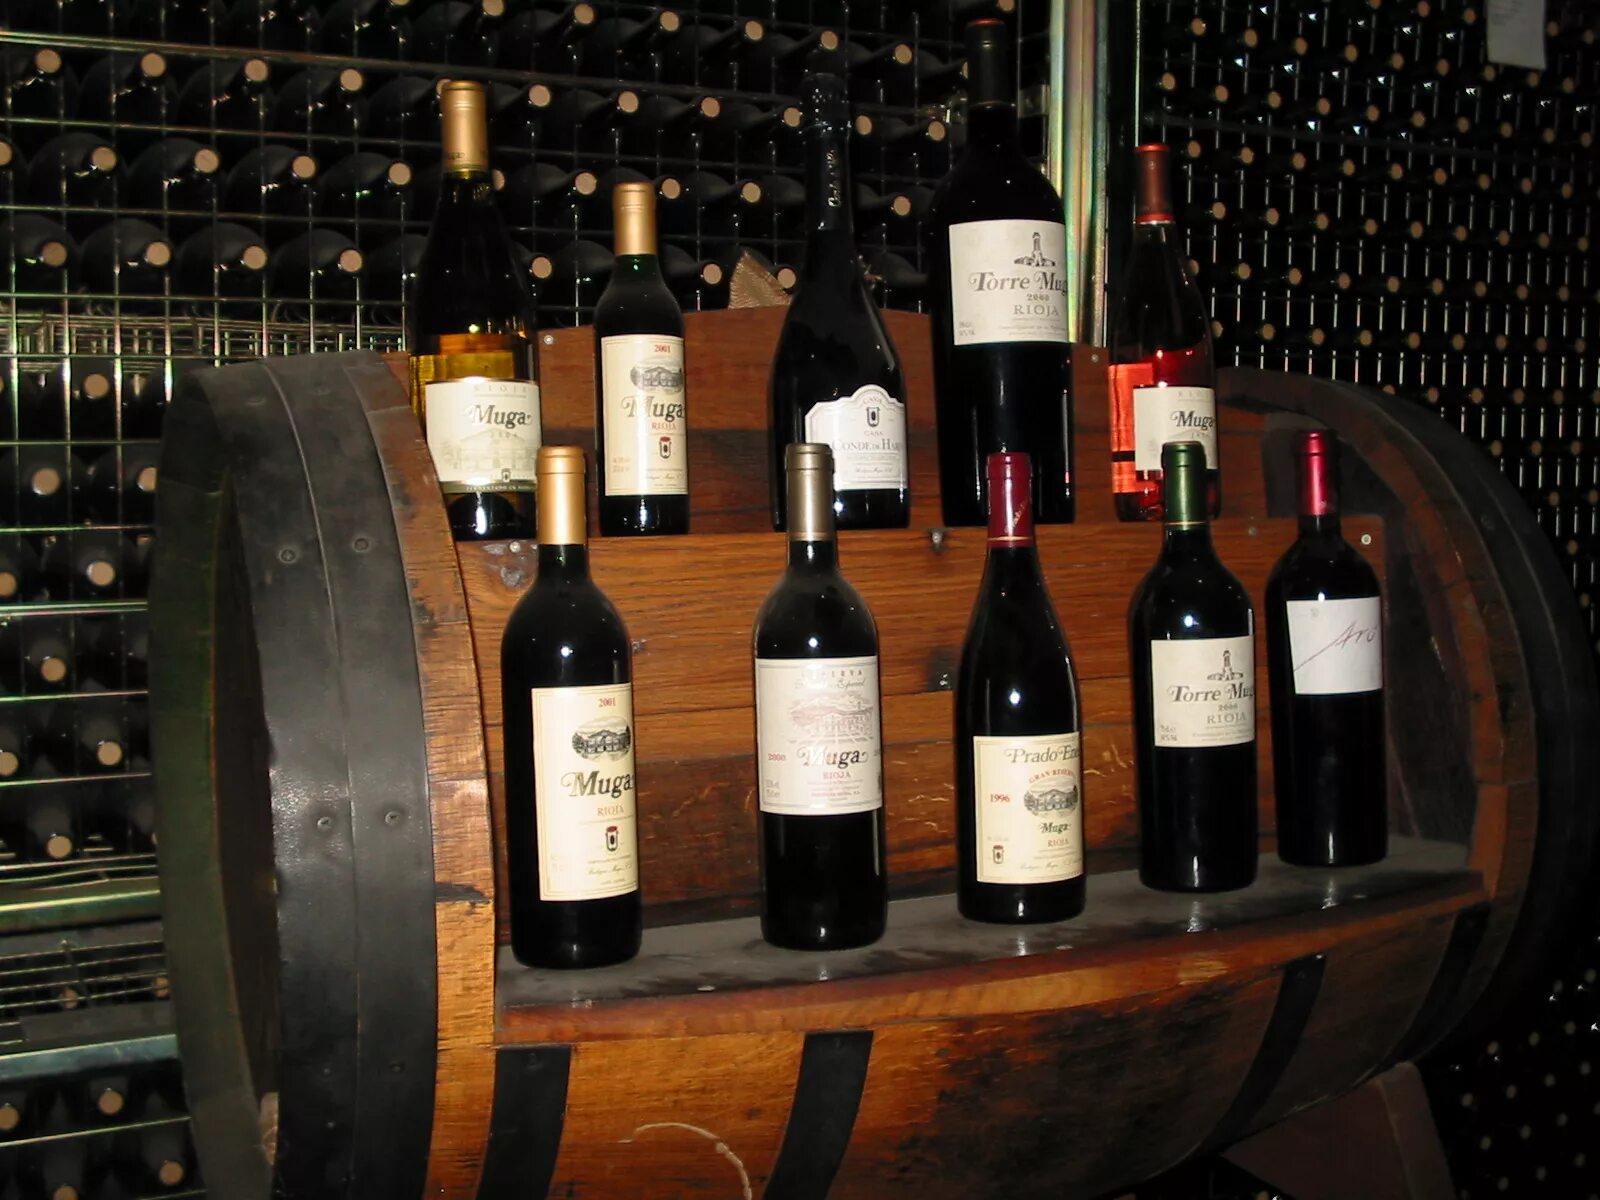 Цена самого дорогого вина. Марчело вино Риоха. Винный погреб в Испании ла Риоха. Дорогое вино. Самая дорогая бутылка вина в мире.